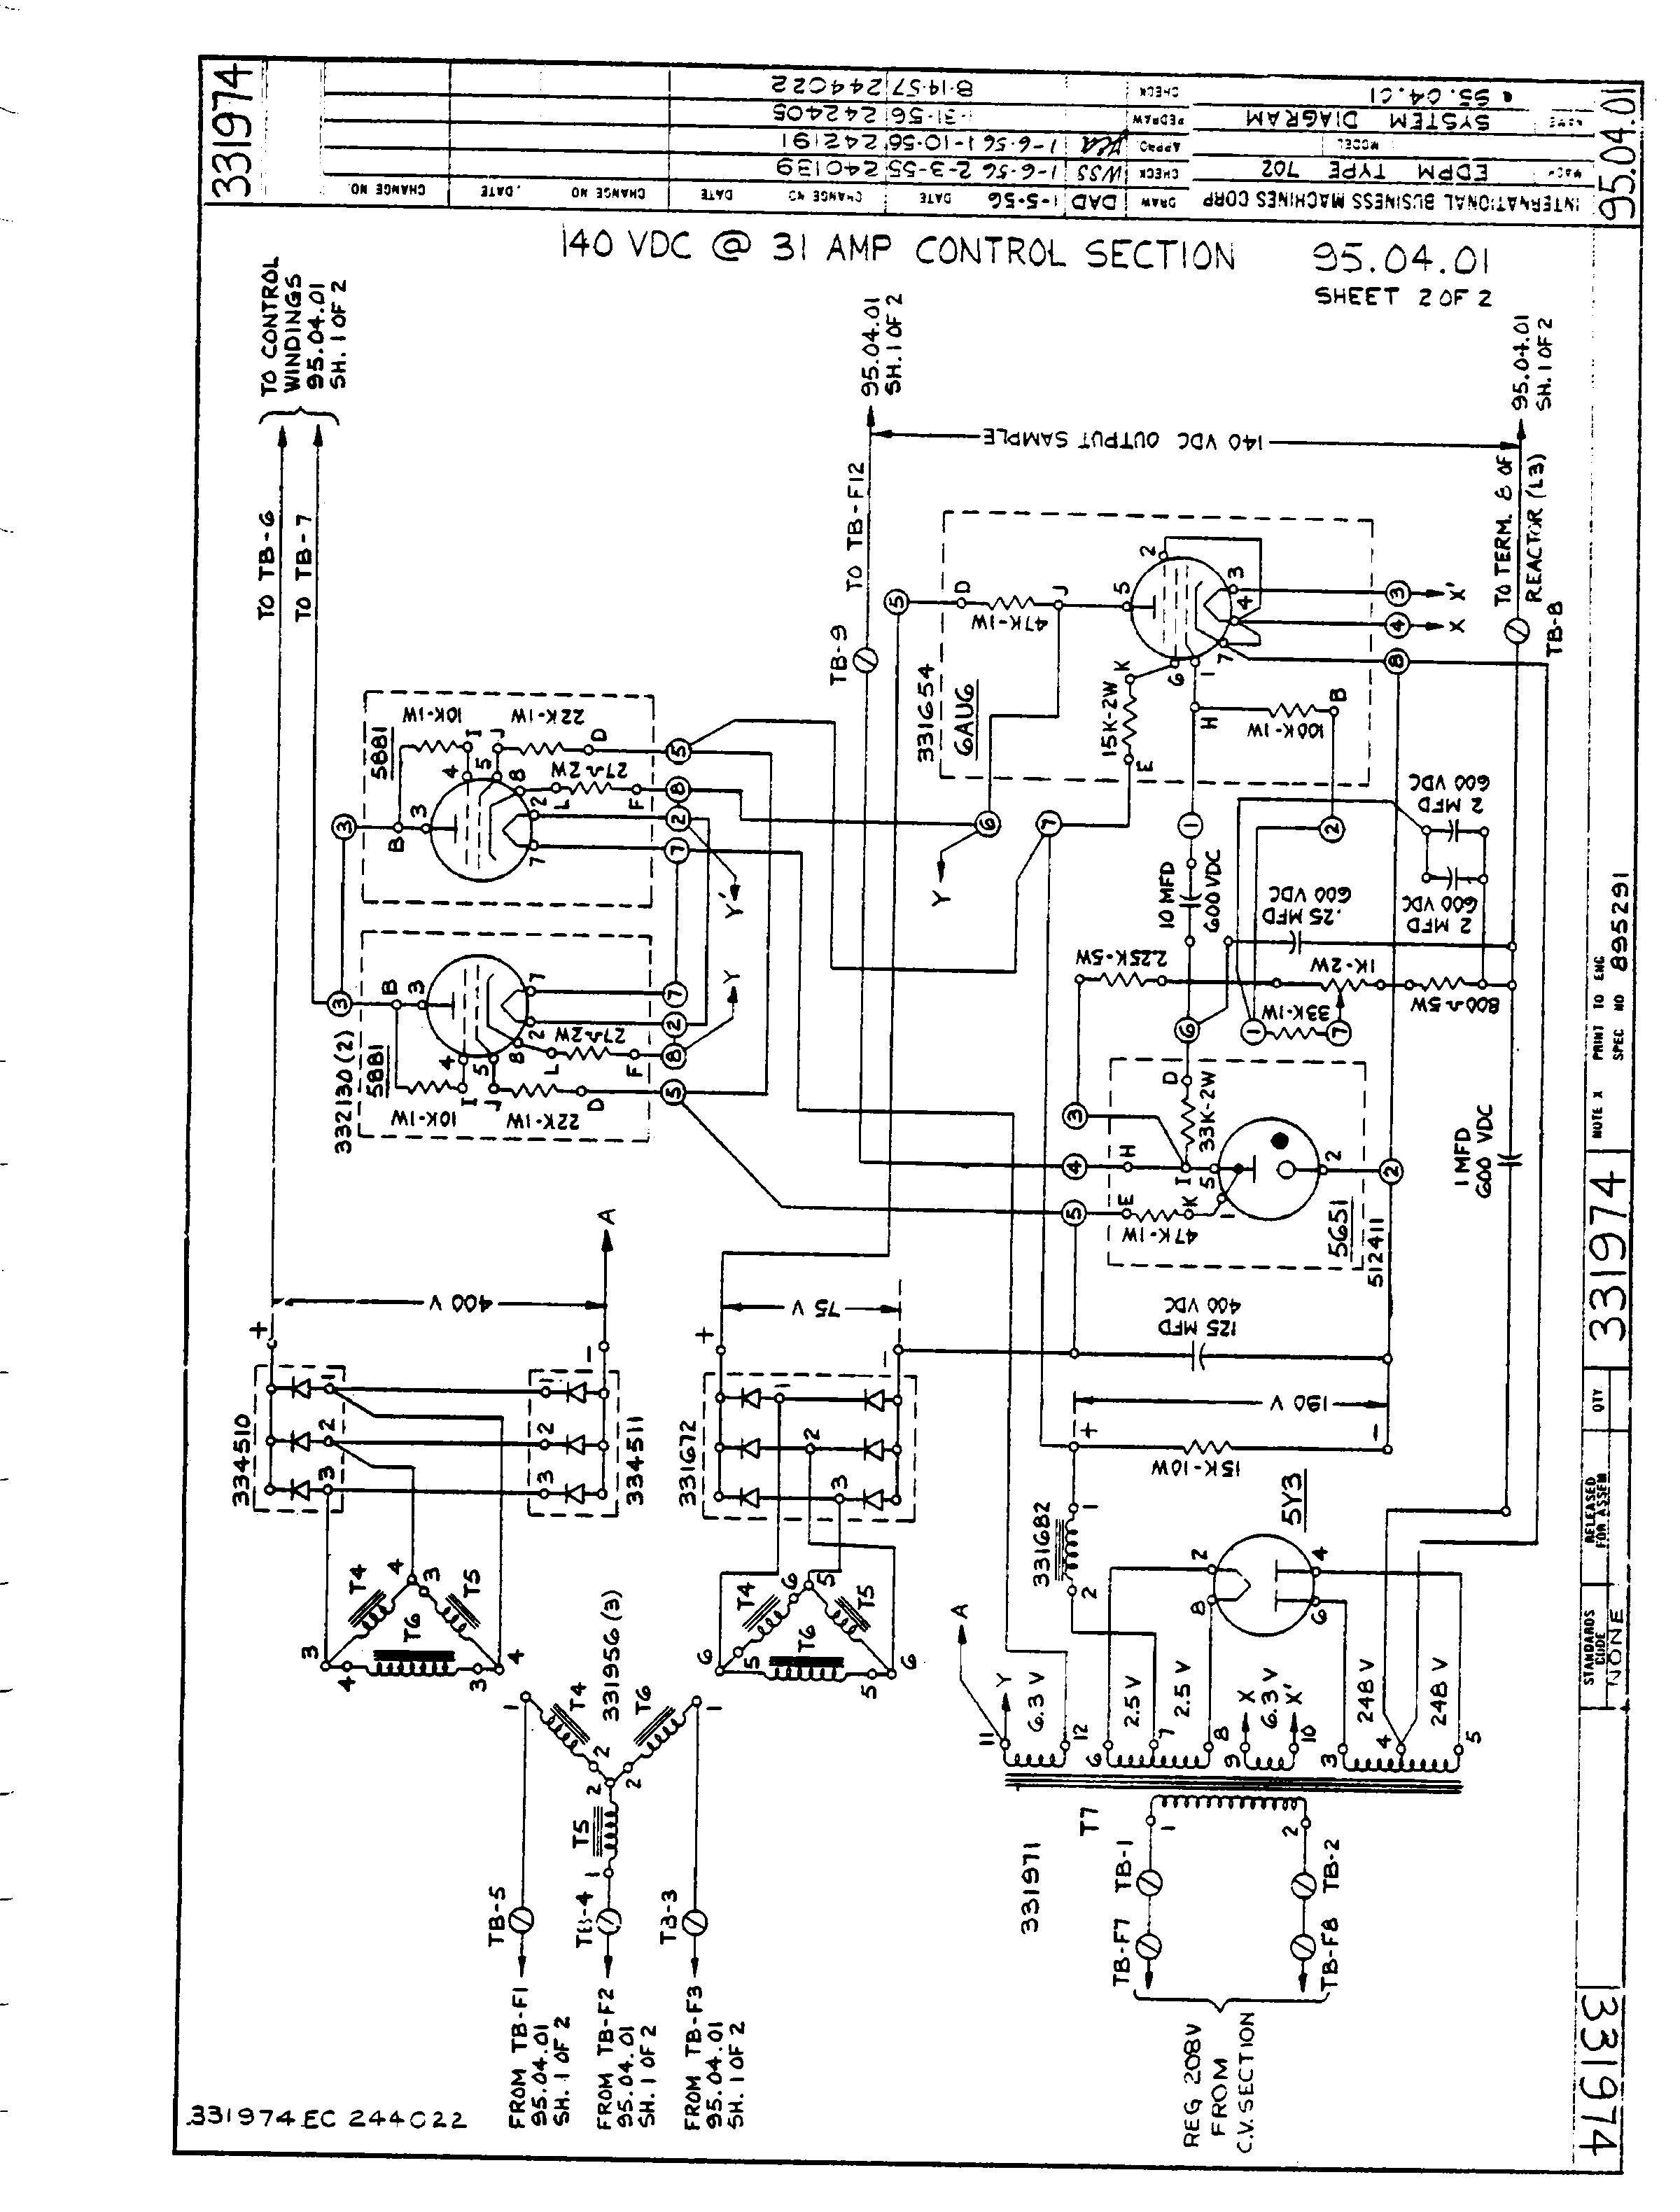 IBM 705 Drawings